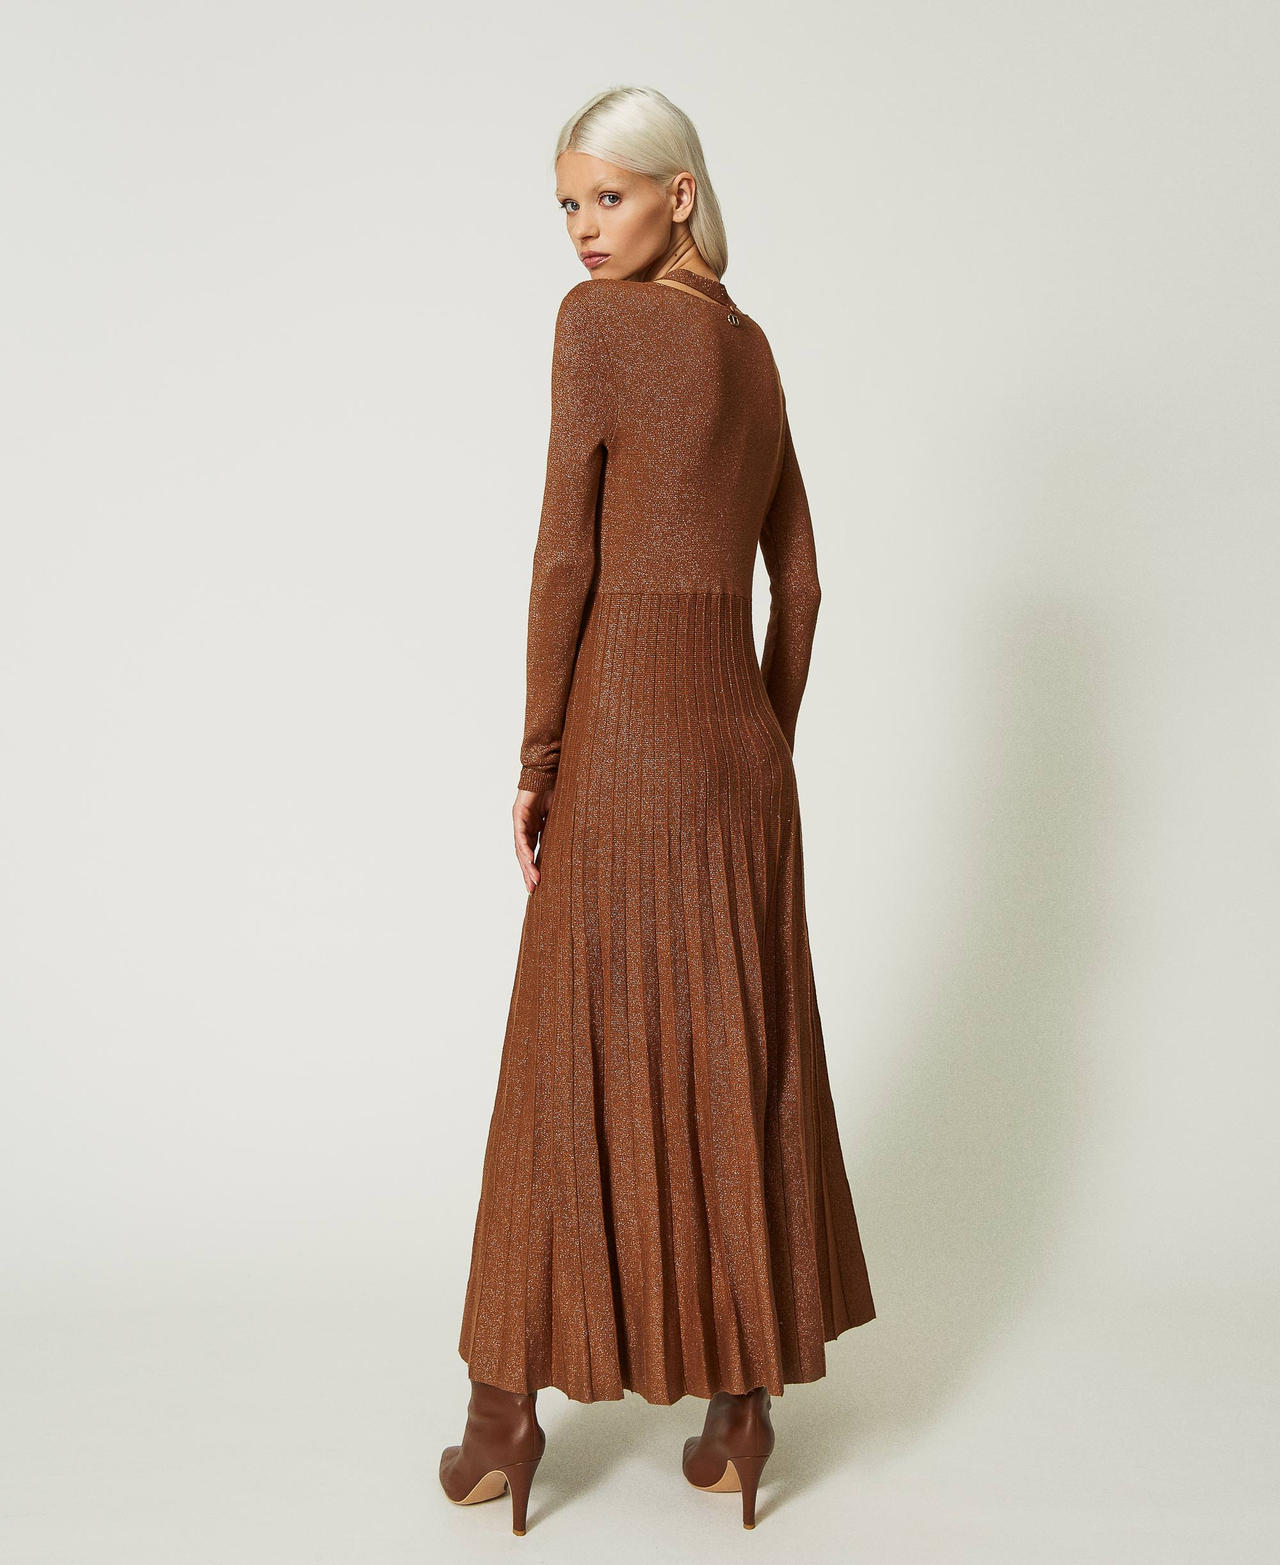 Robe longue en maille plissée lurex Marron « Bubinga Wood » Femme 232TT3270-03